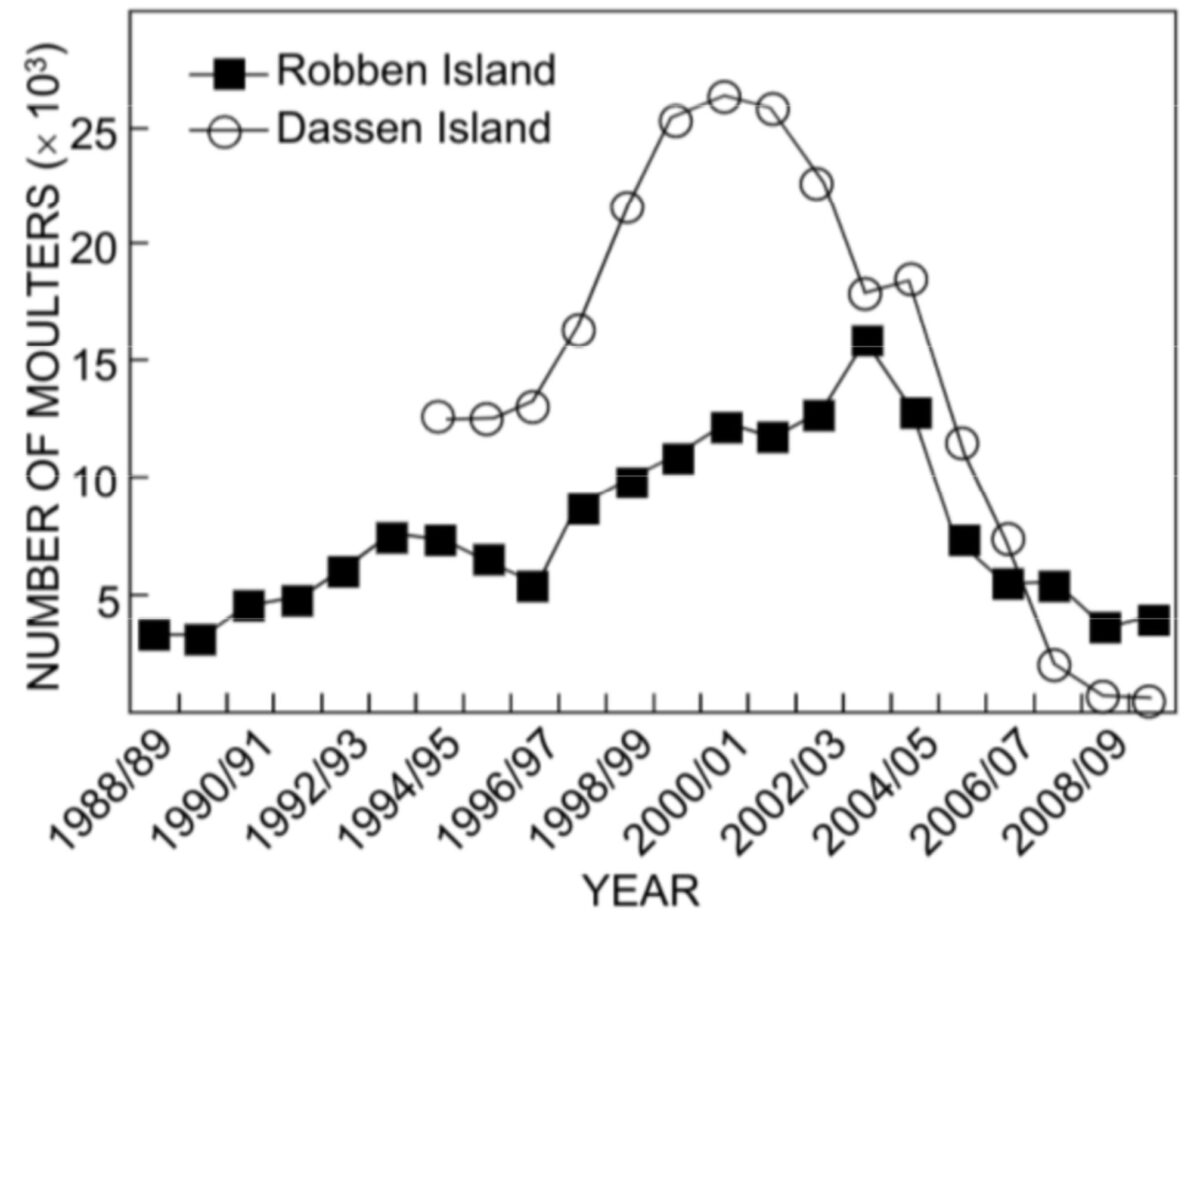 Trends in estimate of adult African penguins moulting around the coastlines of Dassen and Robben islands between 1988/89 and 2009/10. Crawford et al., (2011)